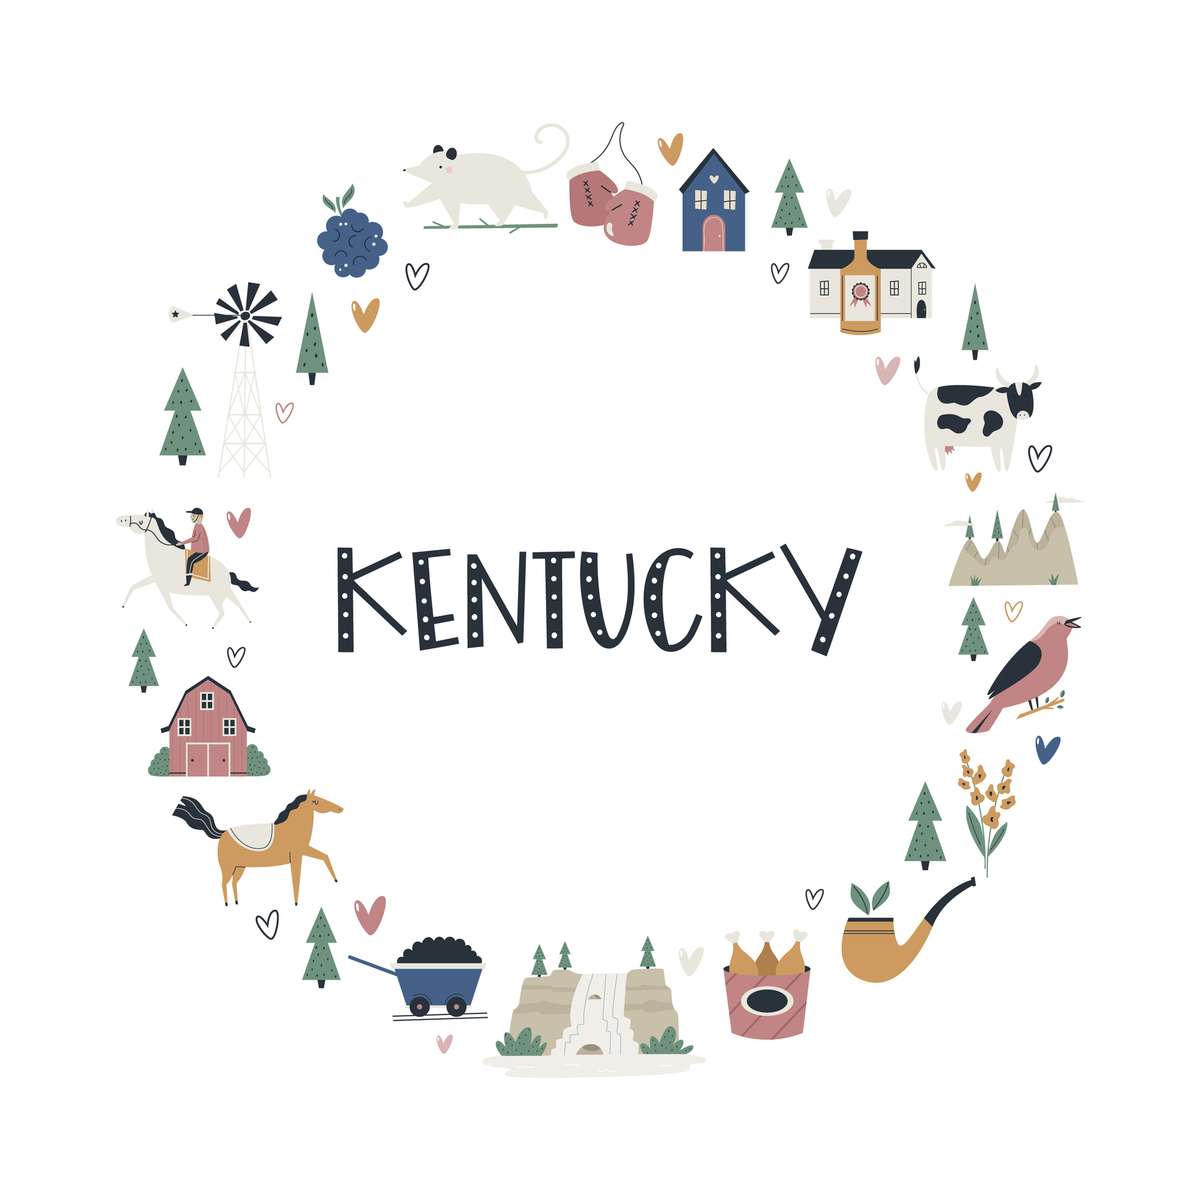 Kentucky puzzle online din fotografie